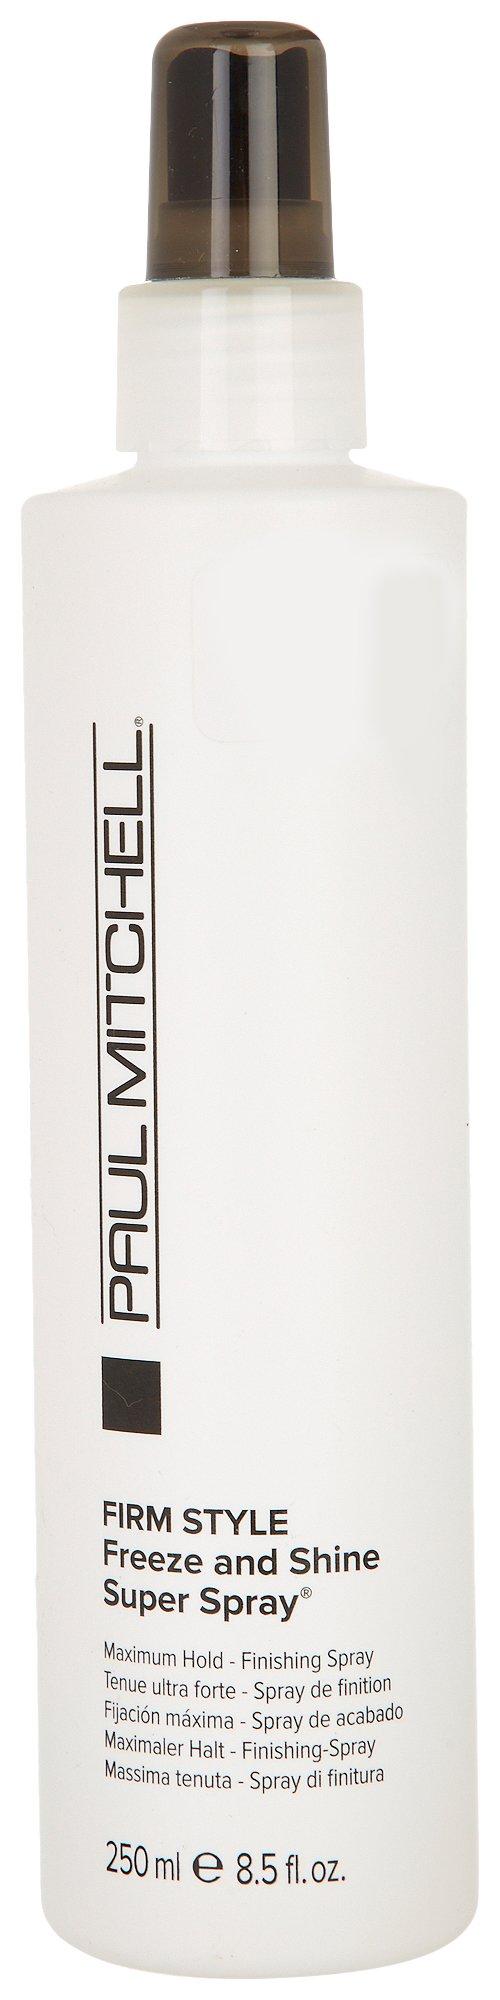 Paul Mitchell 8.5 fl.oz. Firm Style Super Hair Spray